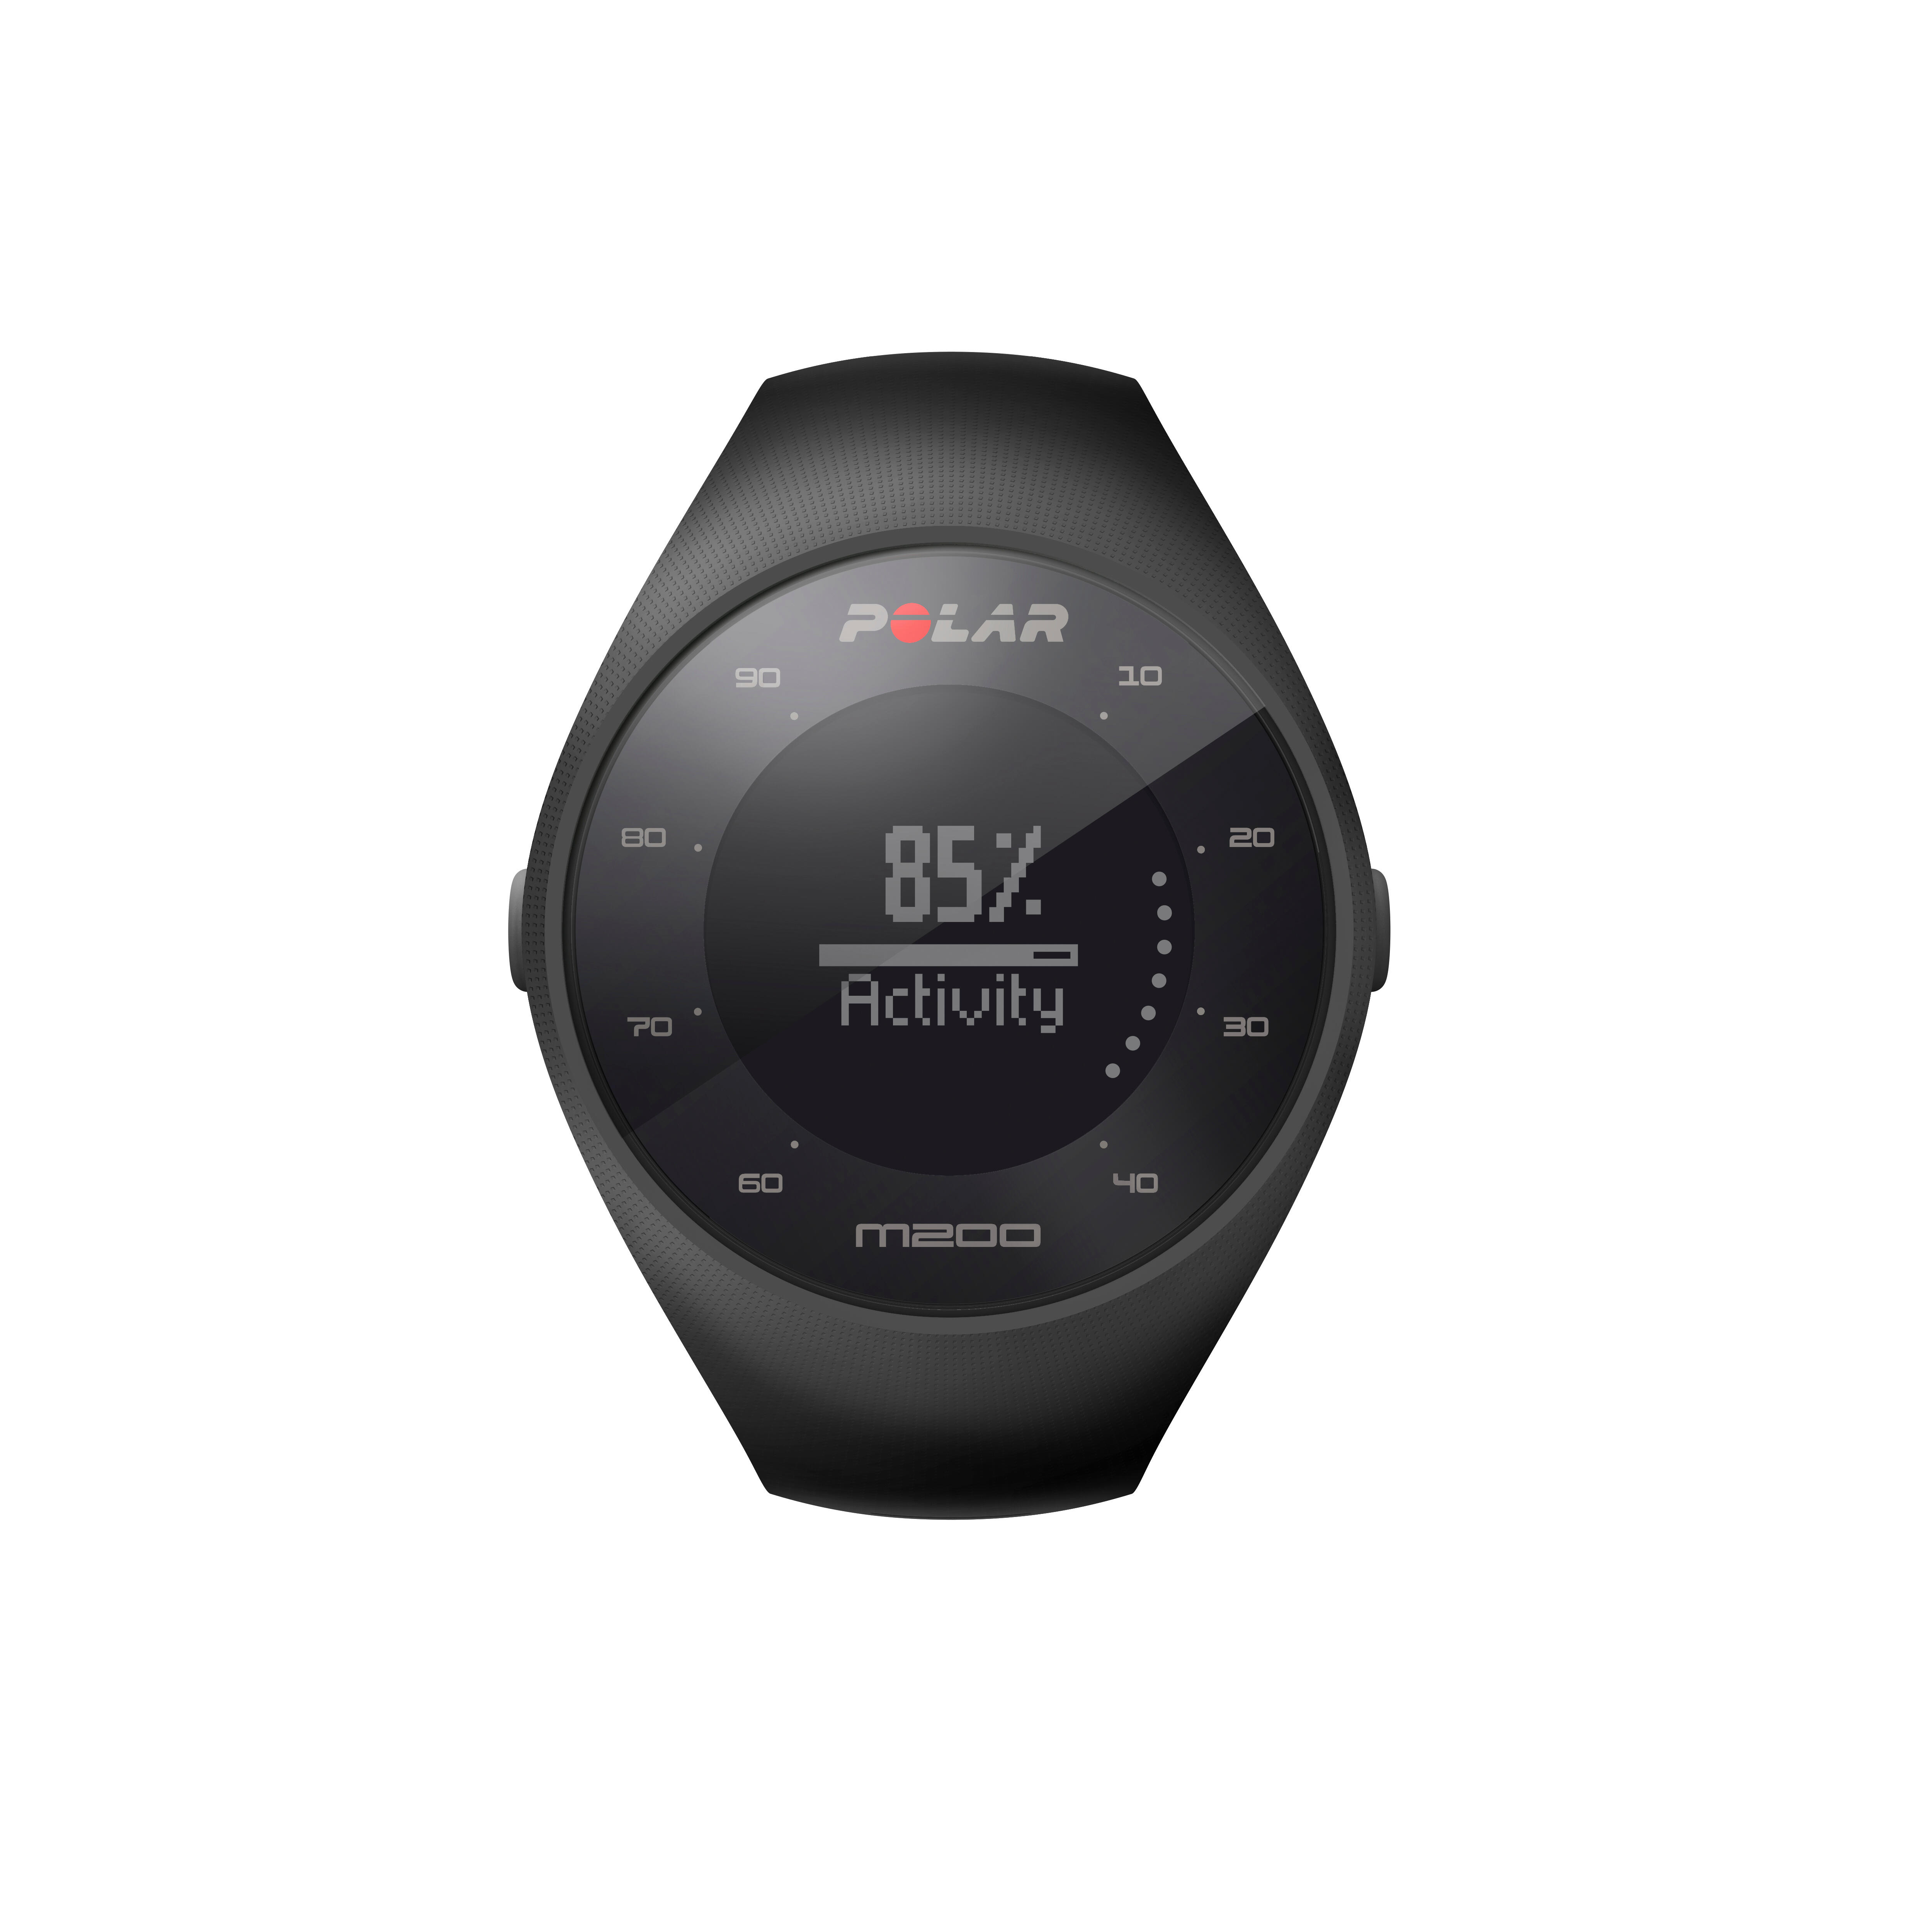 M200 Wrist Heart Rate Monitor GPS 